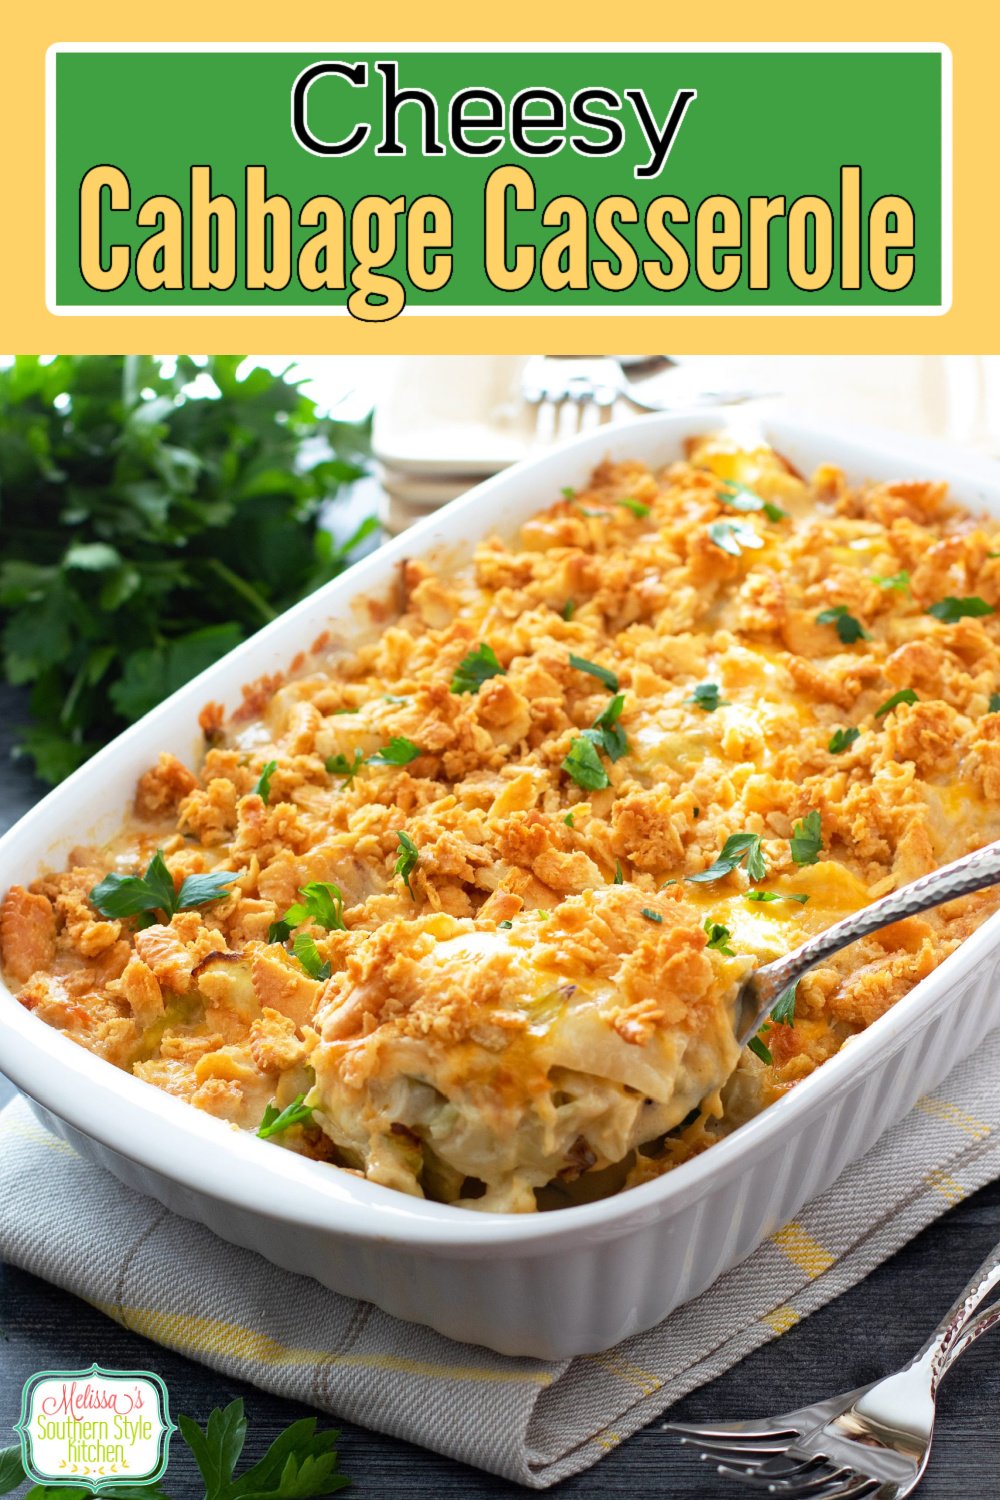 Turn a simple head of cabbage into this delicious Cheesy Cabbage Casserole #cabbagecasserole #cabbage #cabbagerecipes #casseroles #southernfood #southernrecipes #vegetarian #sidedishrecipes via @melissasssk